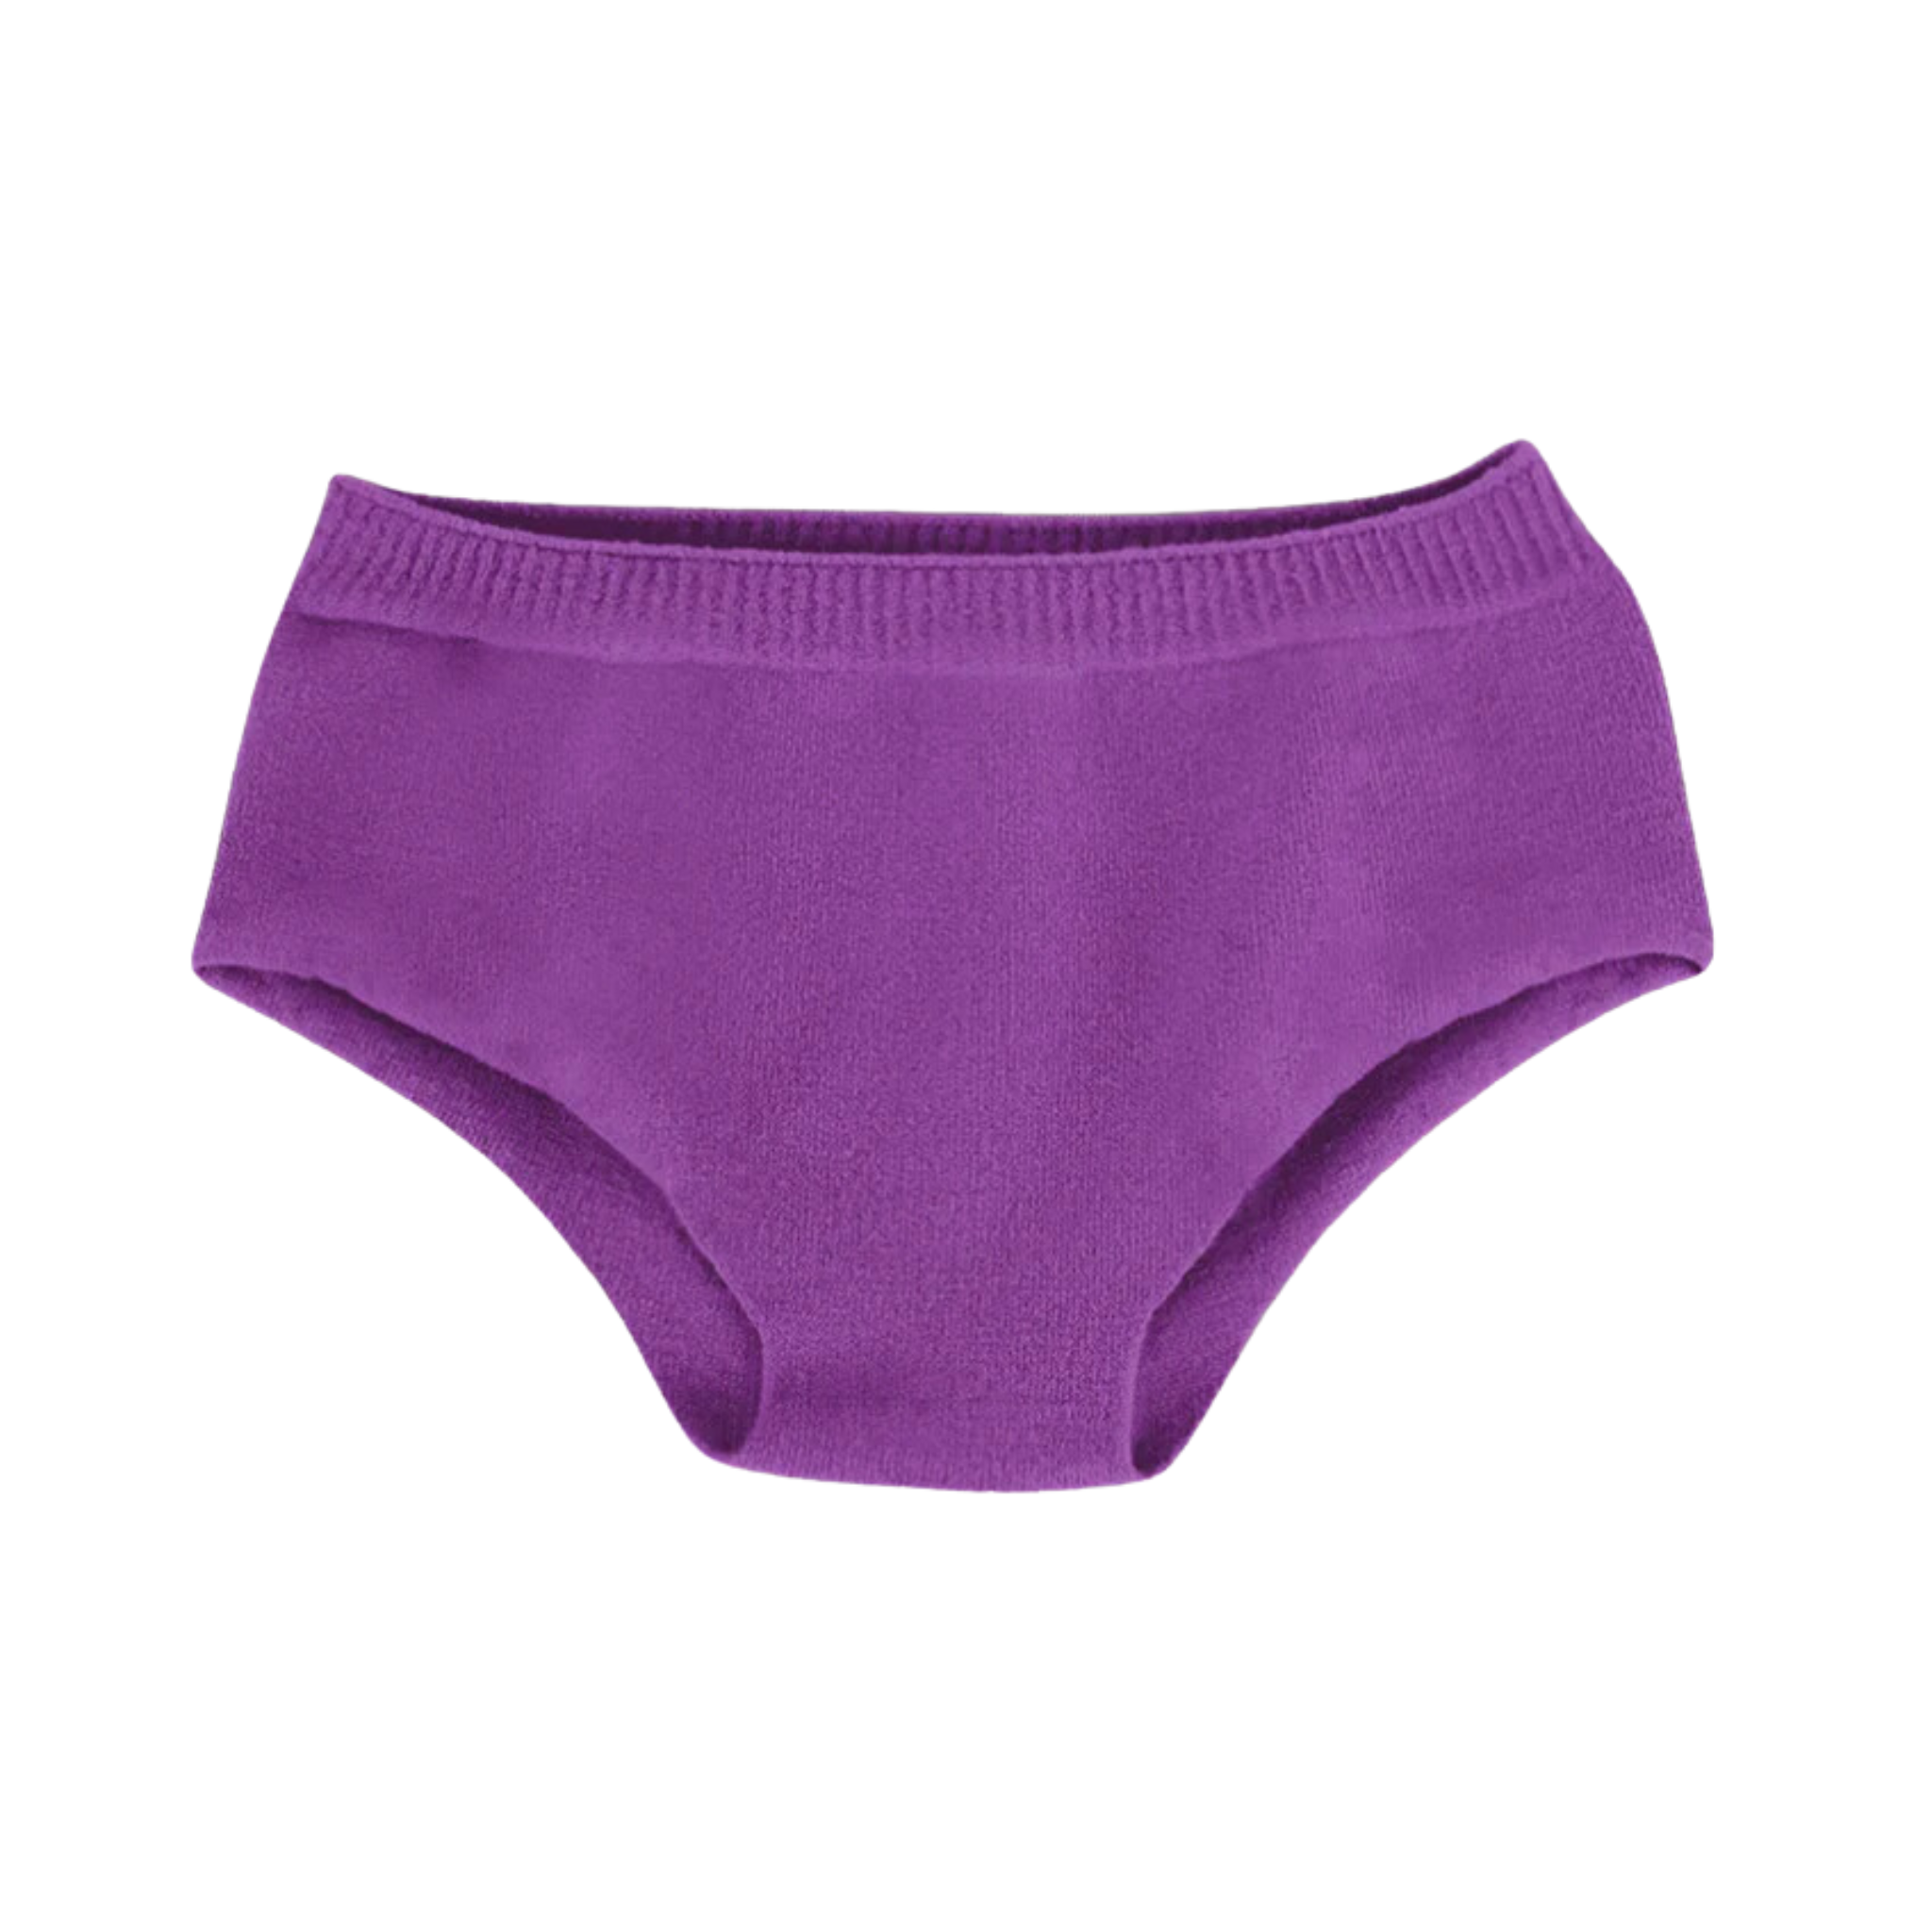 Big Girls Underwear Cotton Teens Girl Panties Size 10-12Years Multipack